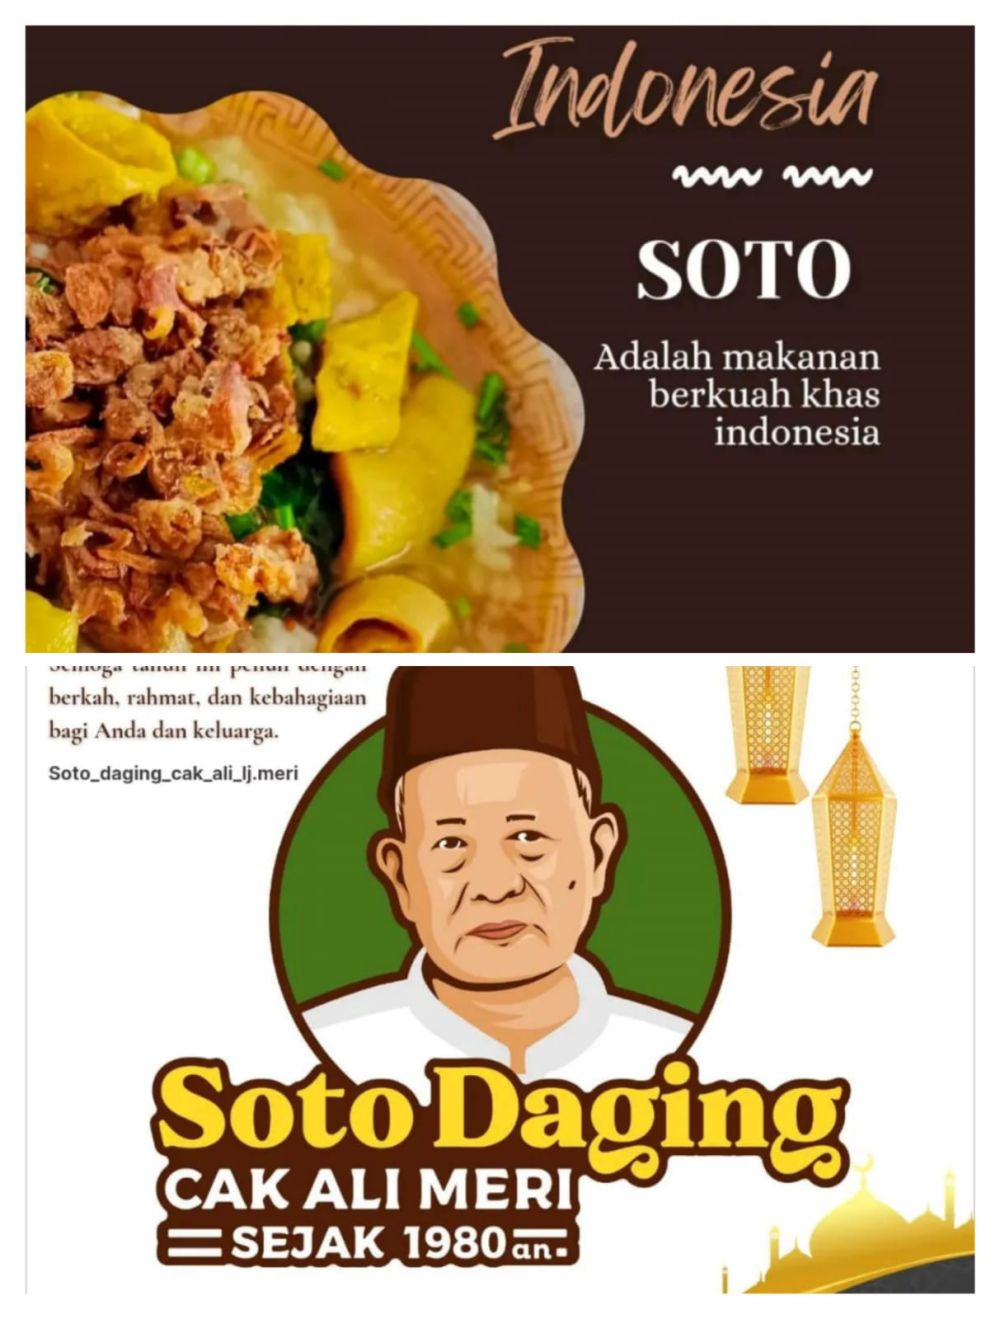 5 Rekomendasi Soto Daging Mojokerto, Kuahnya Gurih Bikin Nagih